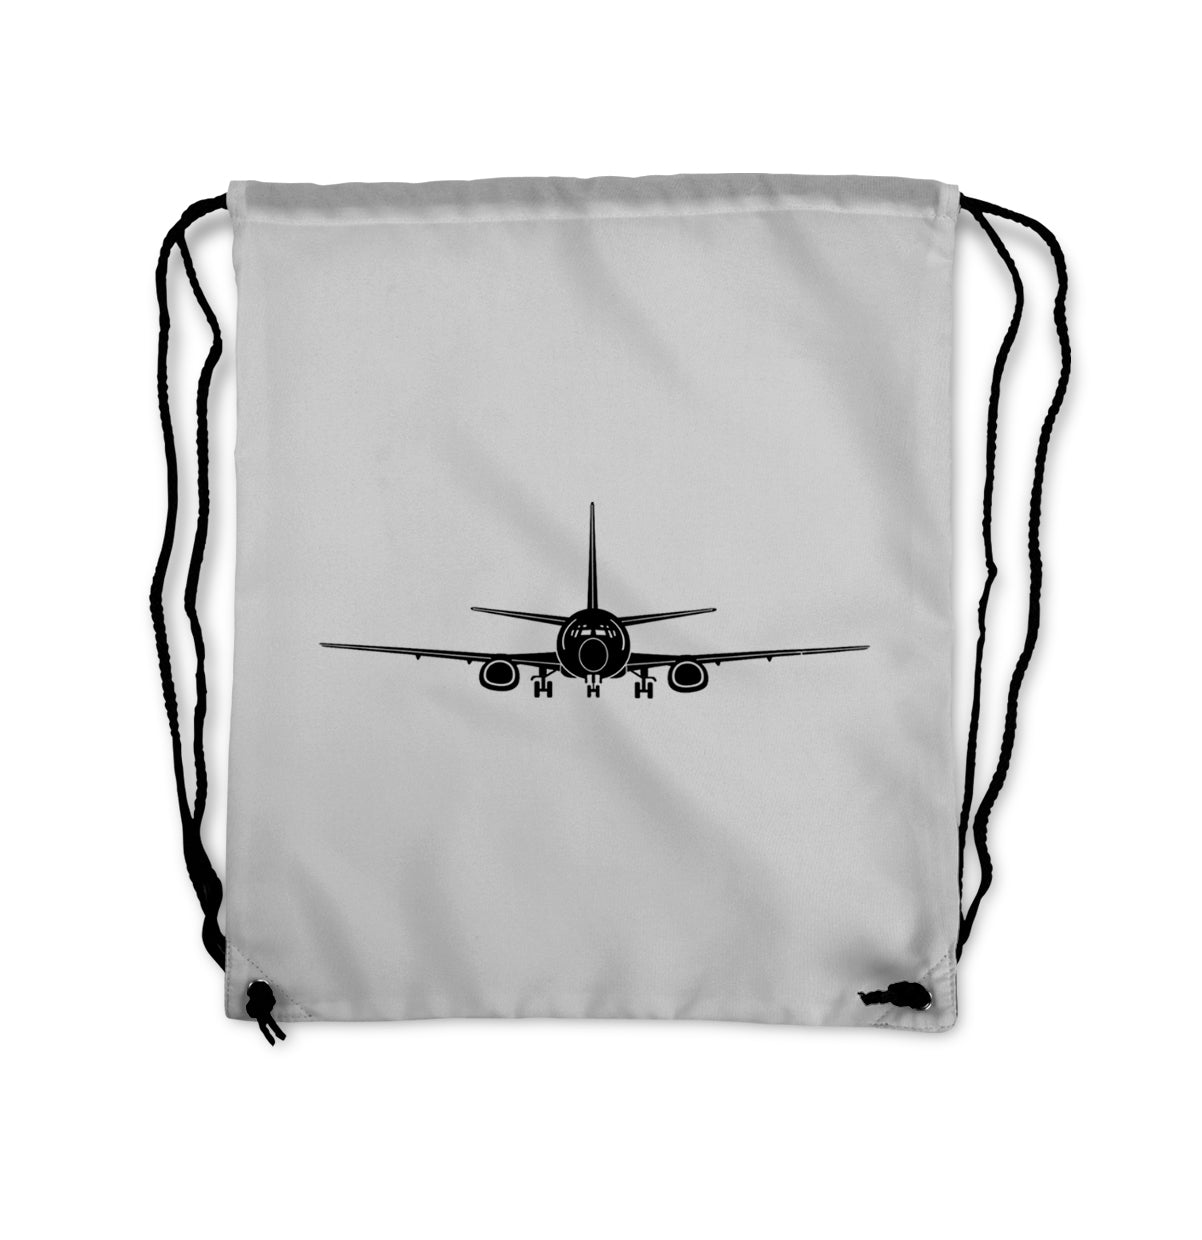 Boeing 737 Silhouette Designed Drawstring Bags